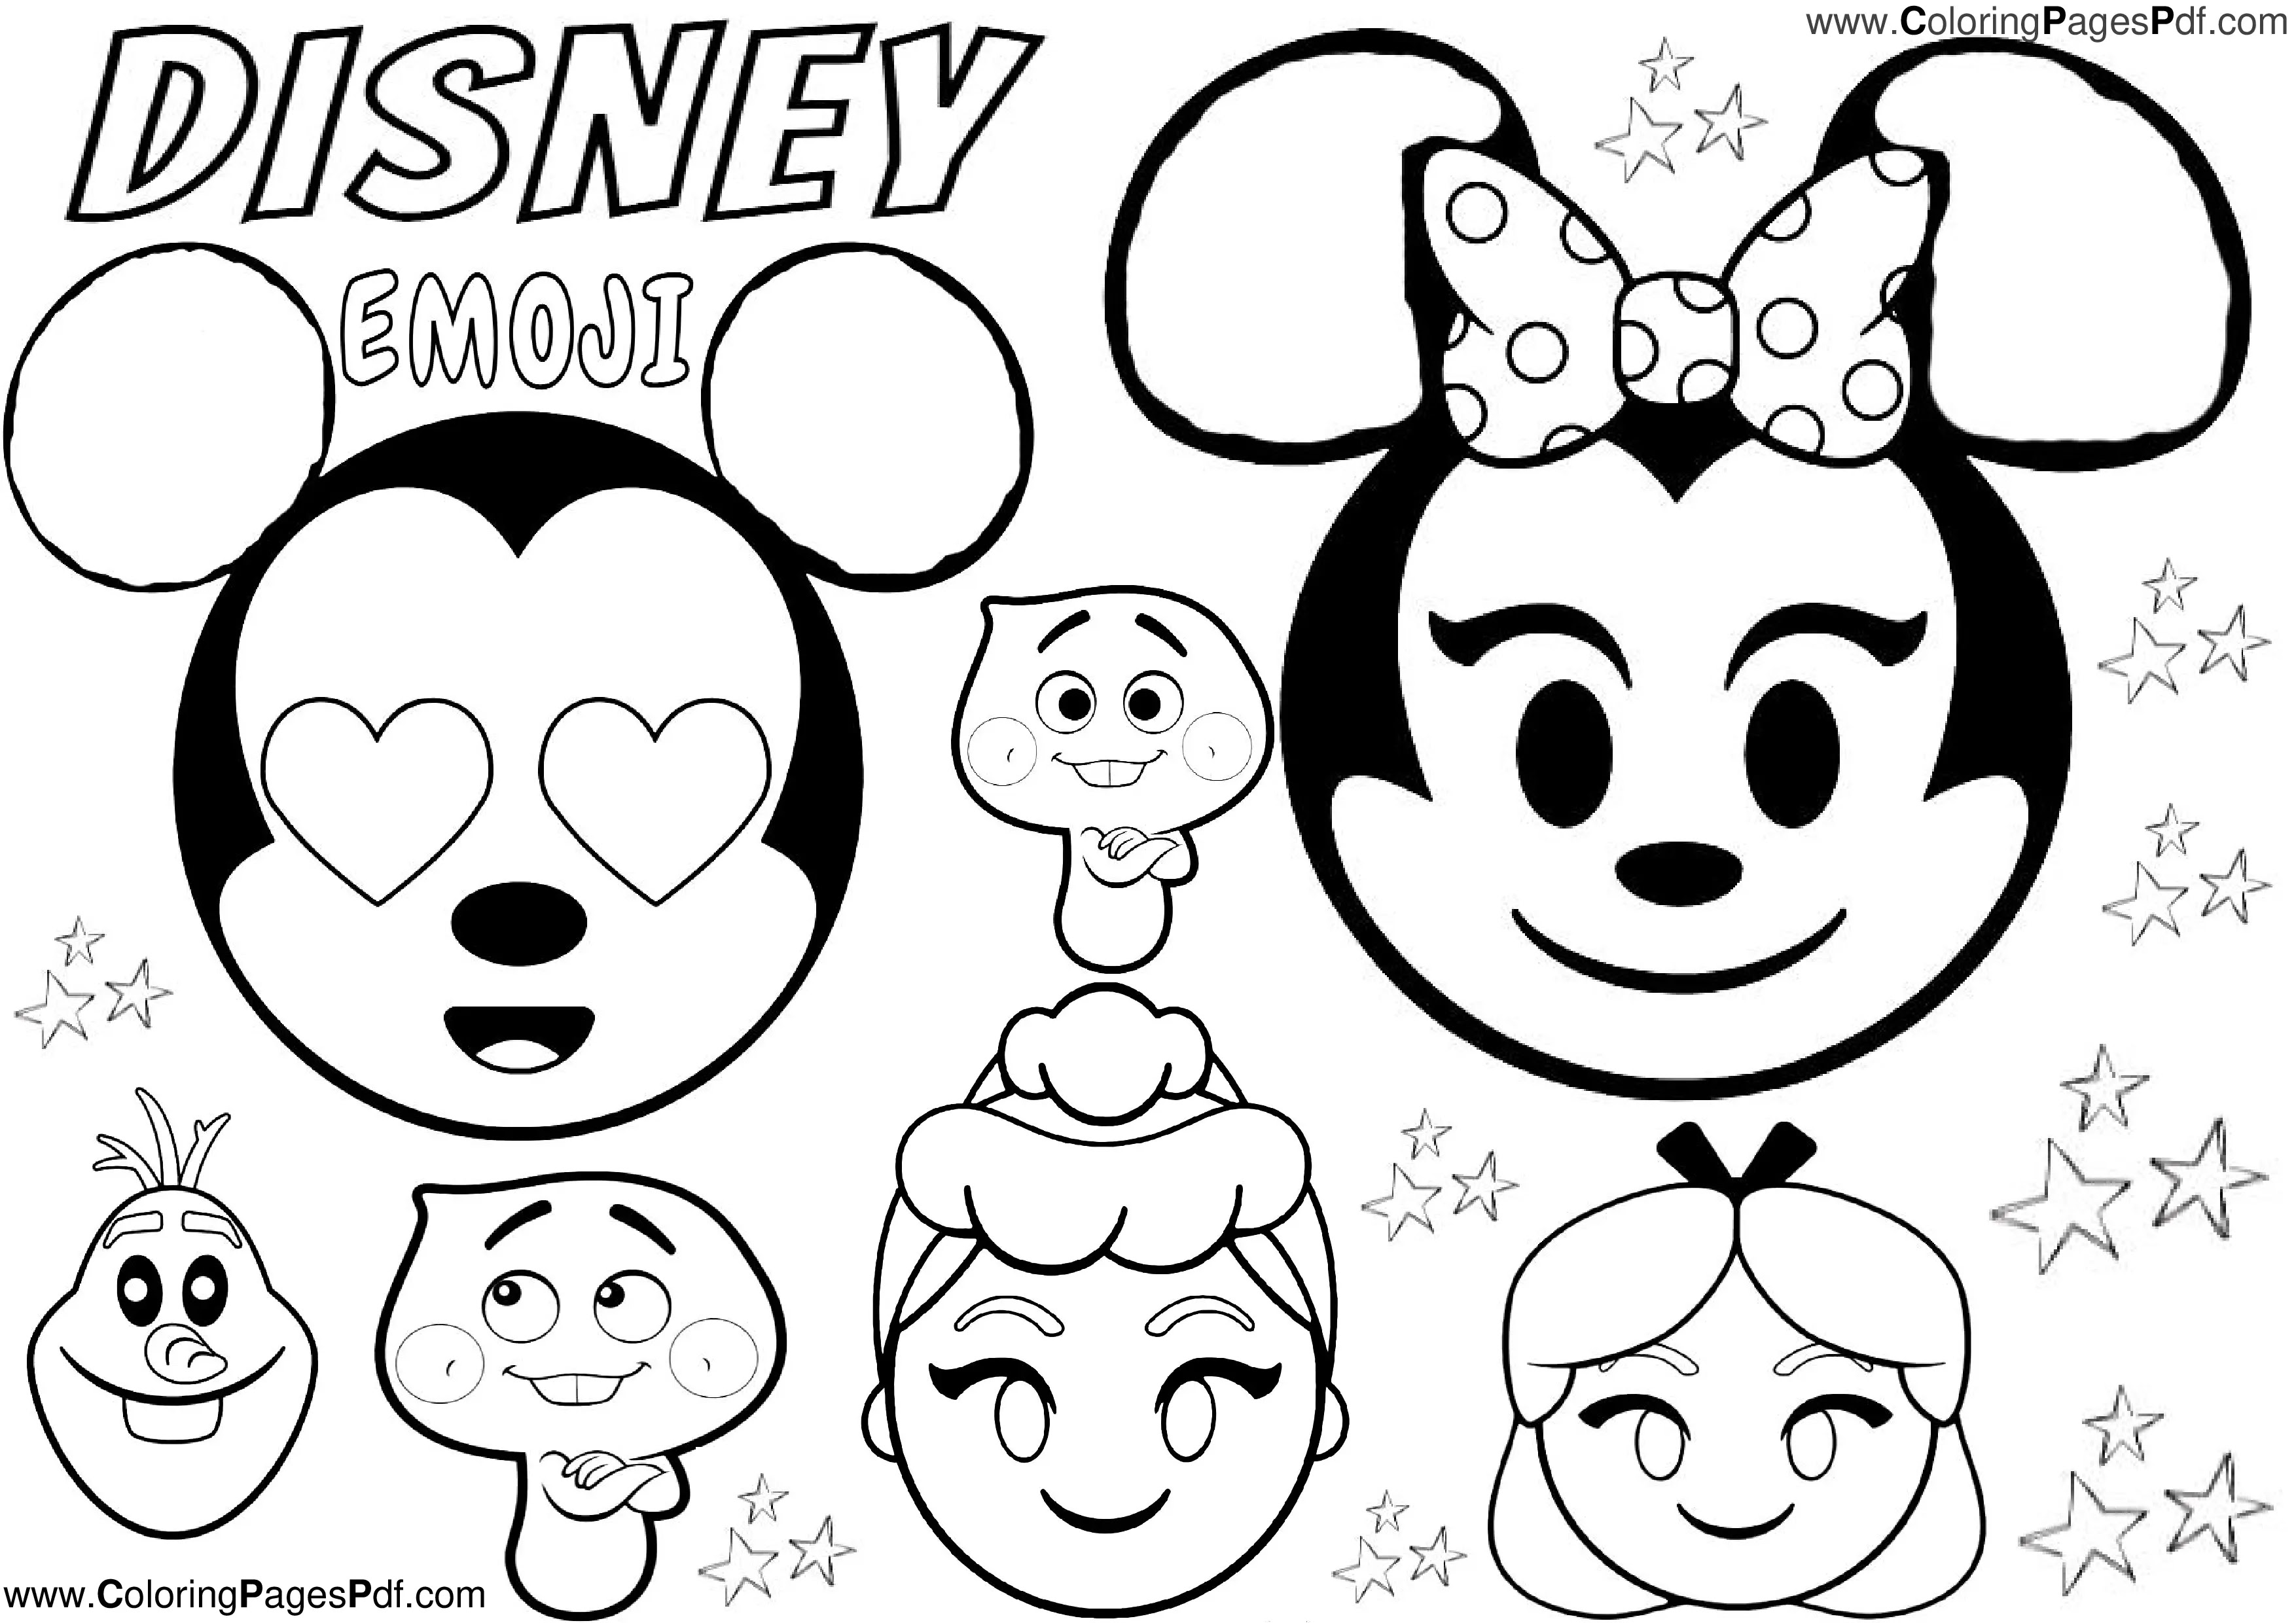 Disney emoji coloring pages